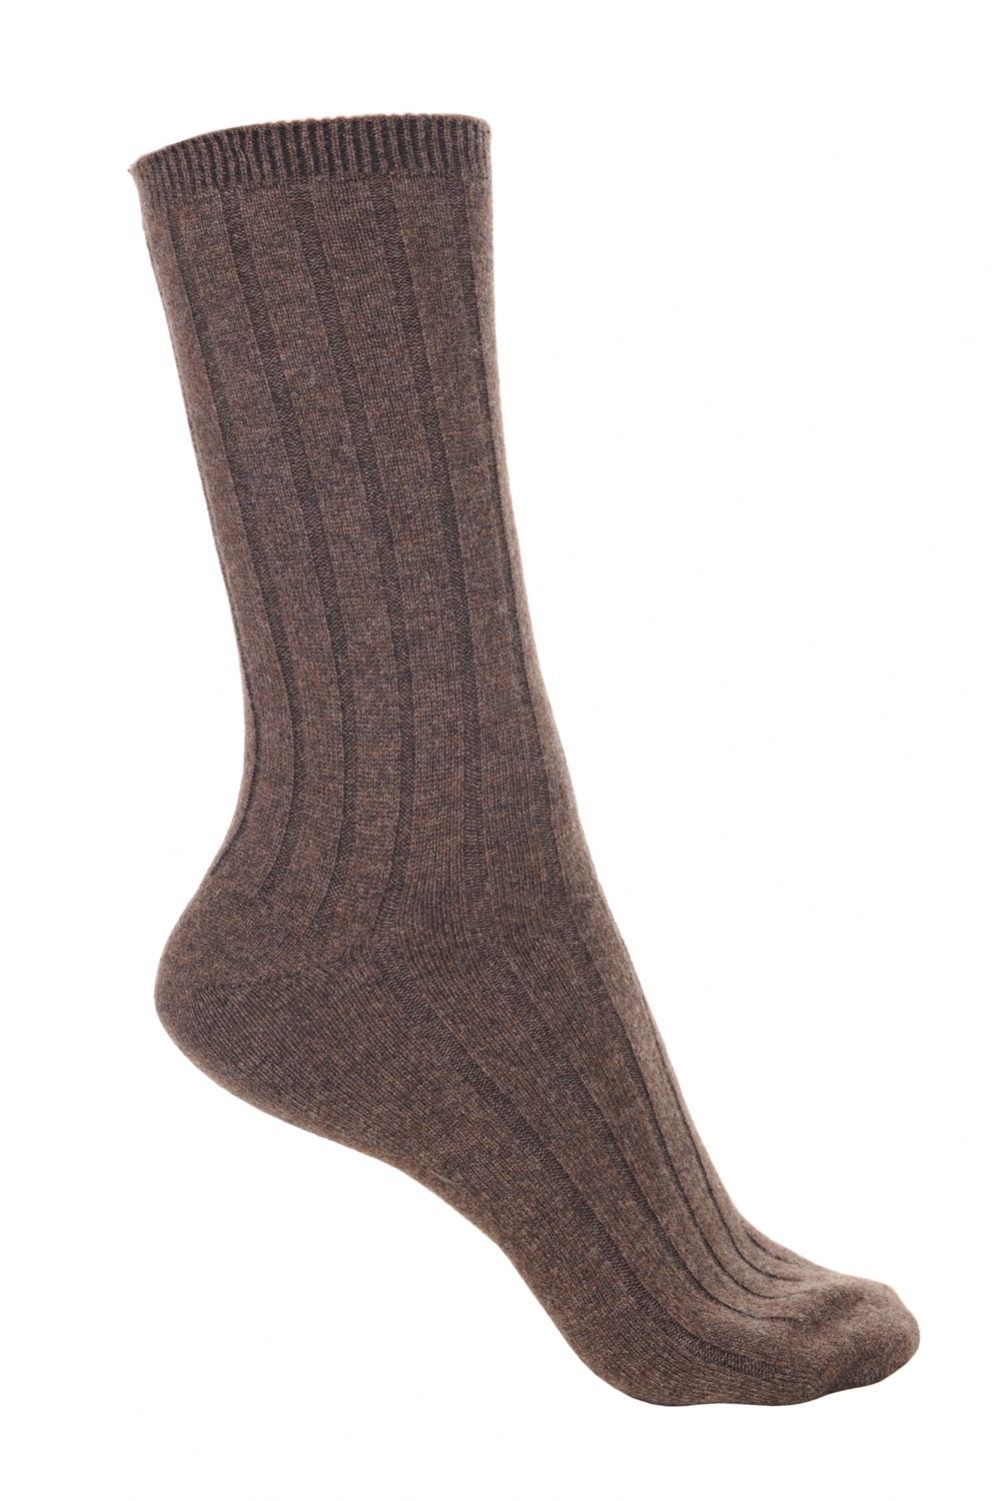 Cashmere & Elastane accessories socks dragibus w marron chine 5 5 8 39 42 